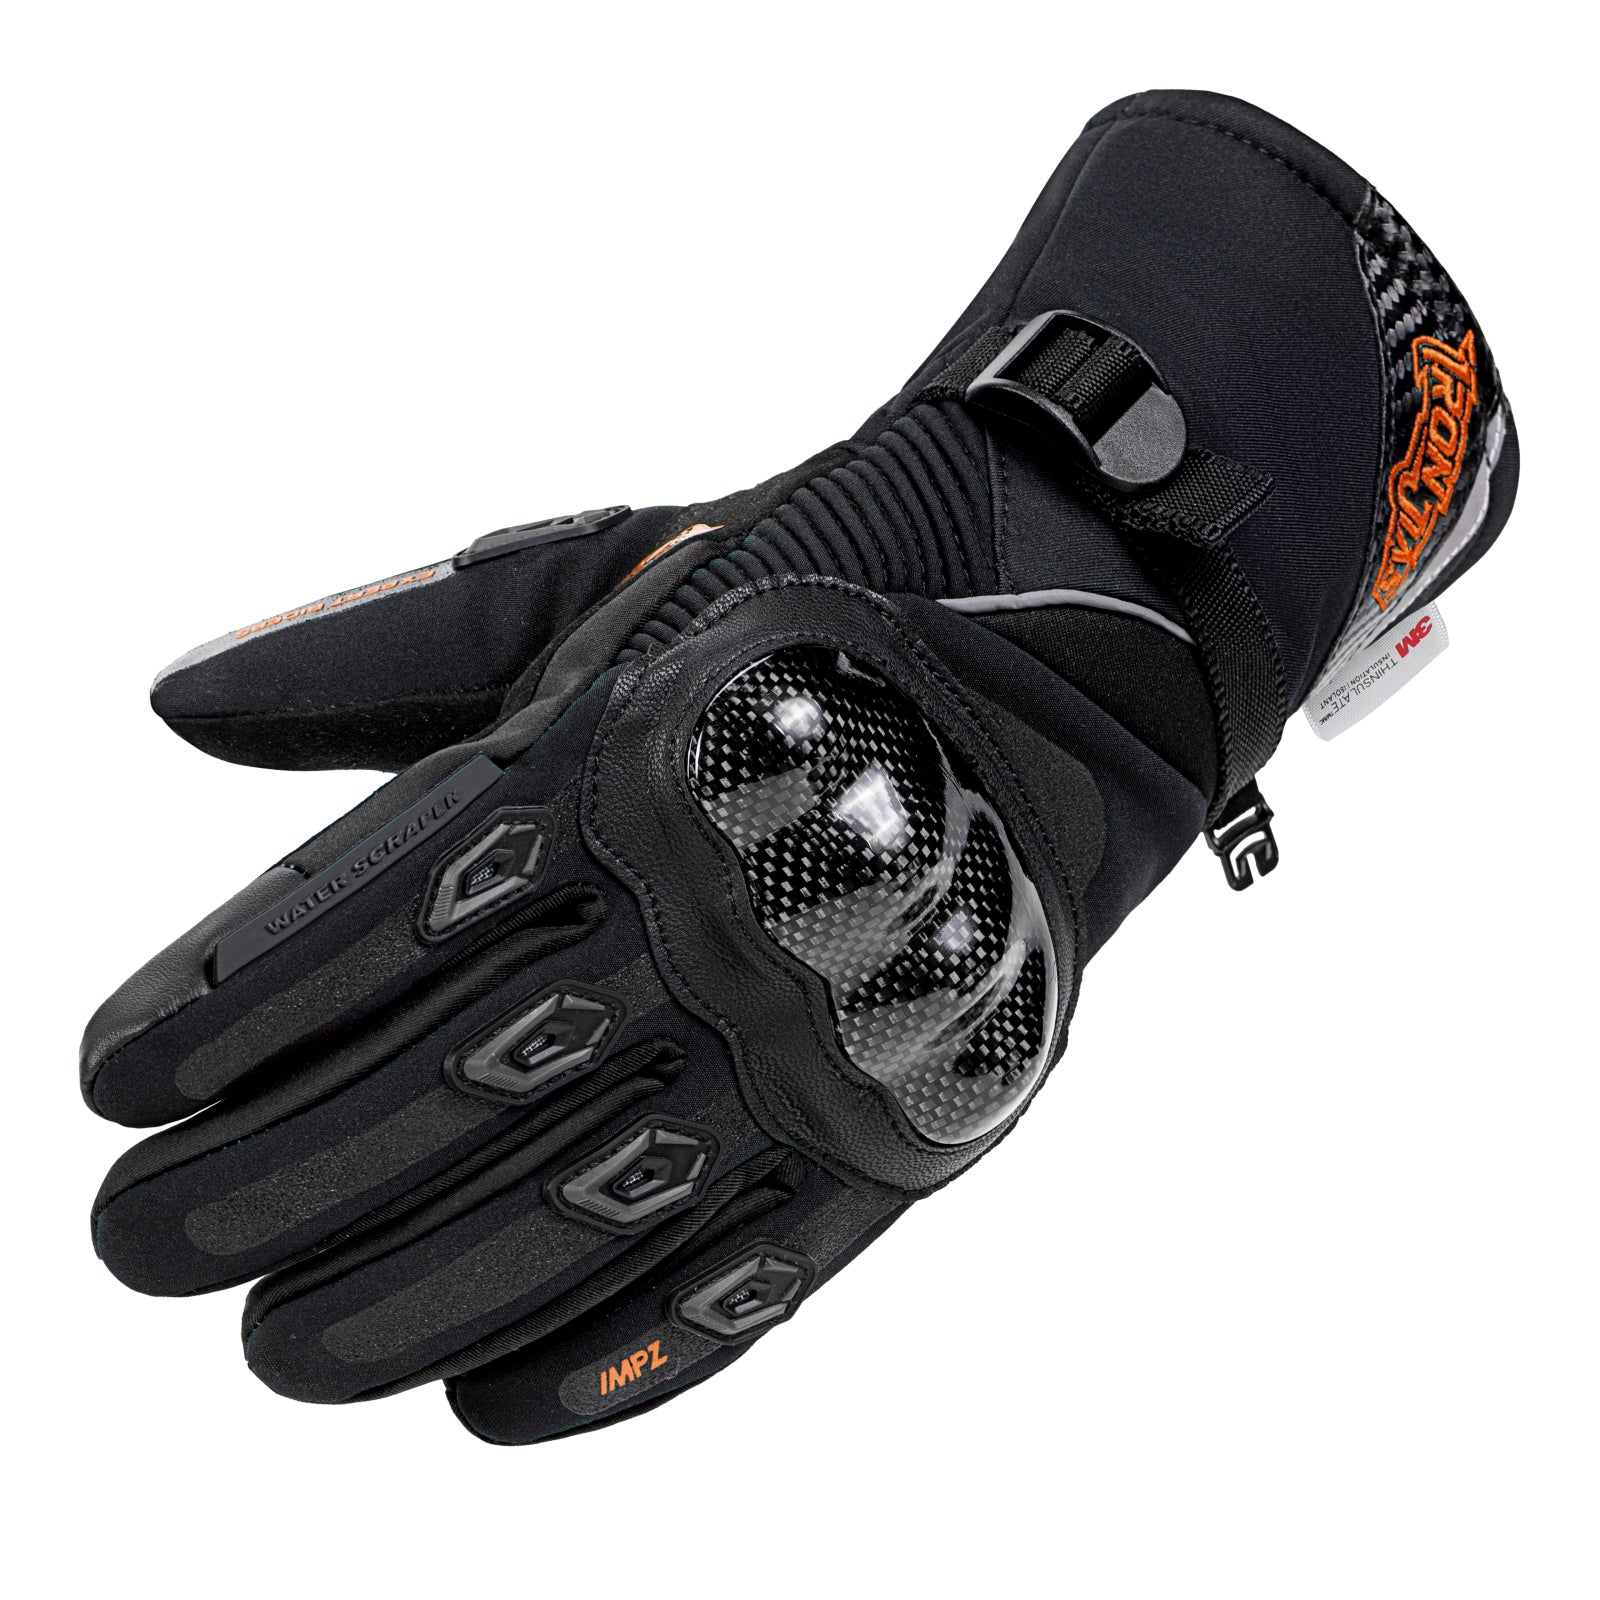 Amazing Waterproof Winter Motorcycle Gloves